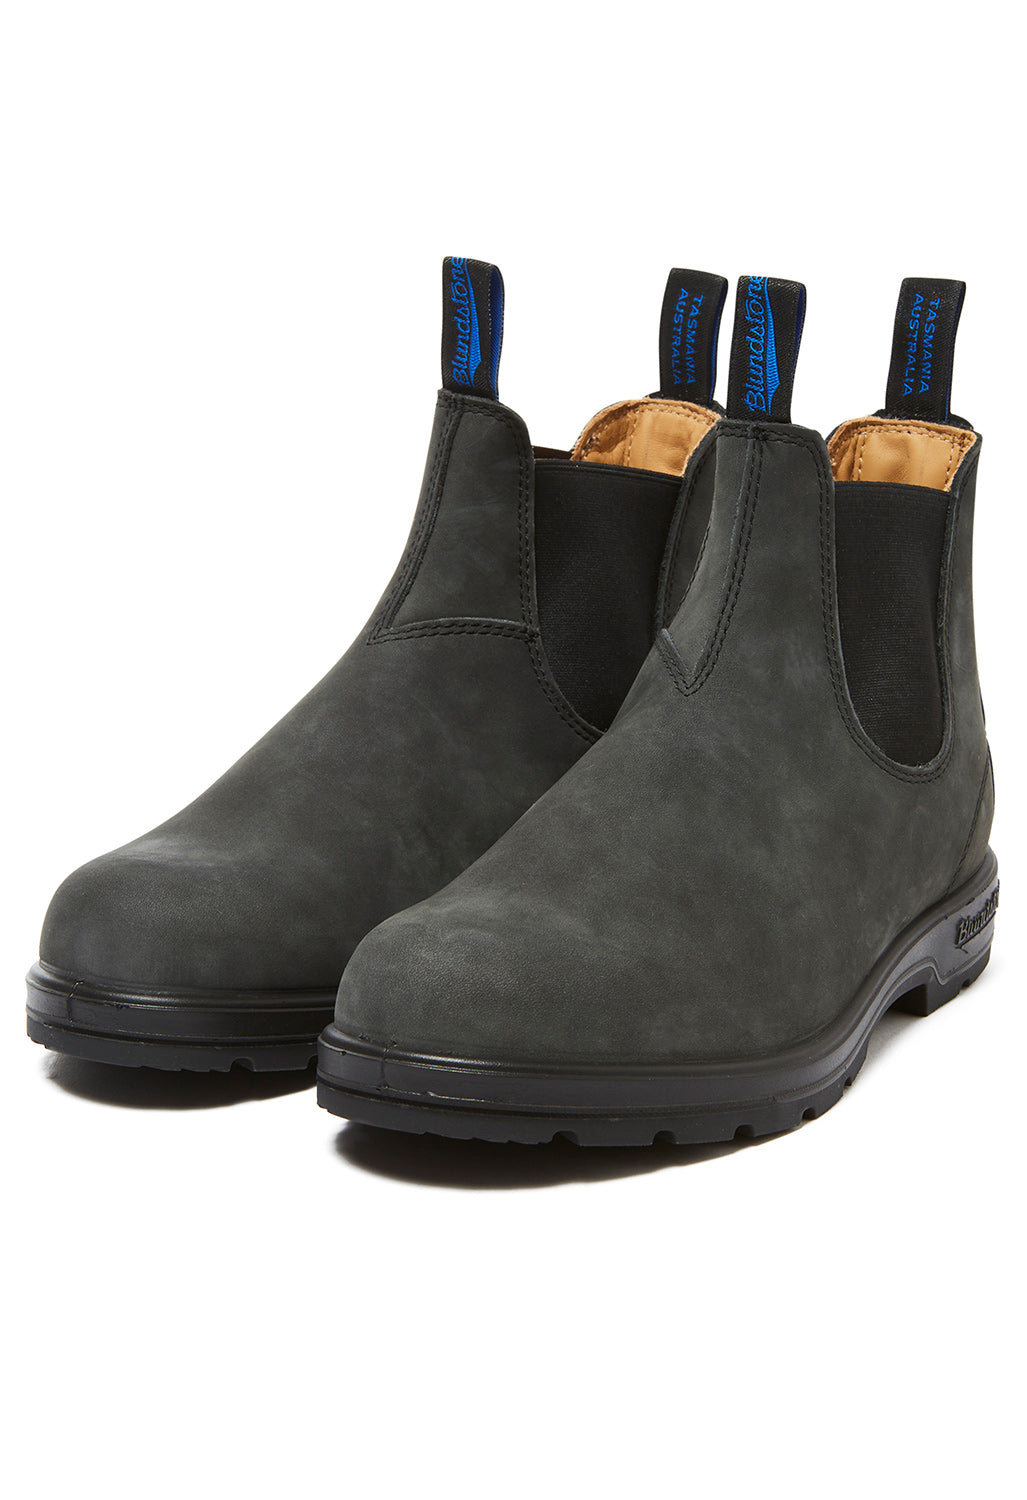 Blundstone 1478 Boots - Rustic Black